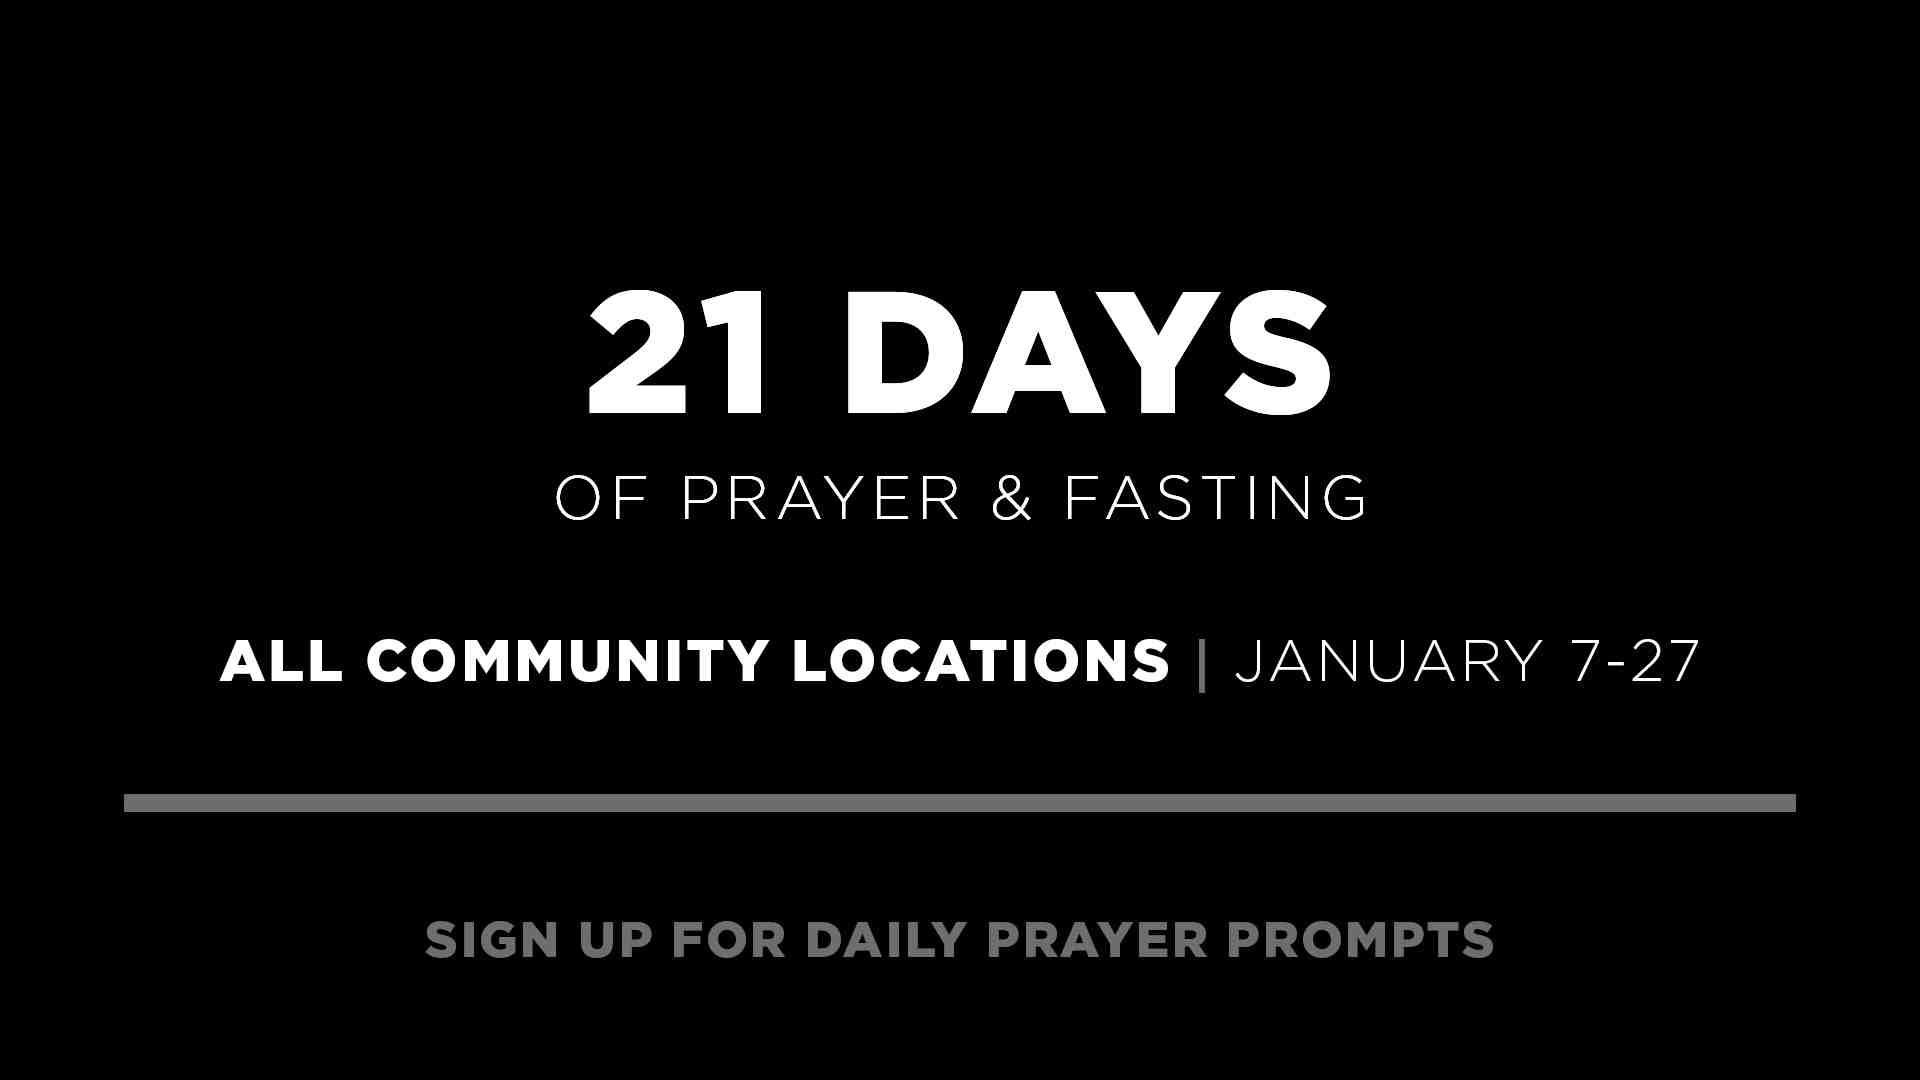 21days-dailyprayerprompt-sign-up2